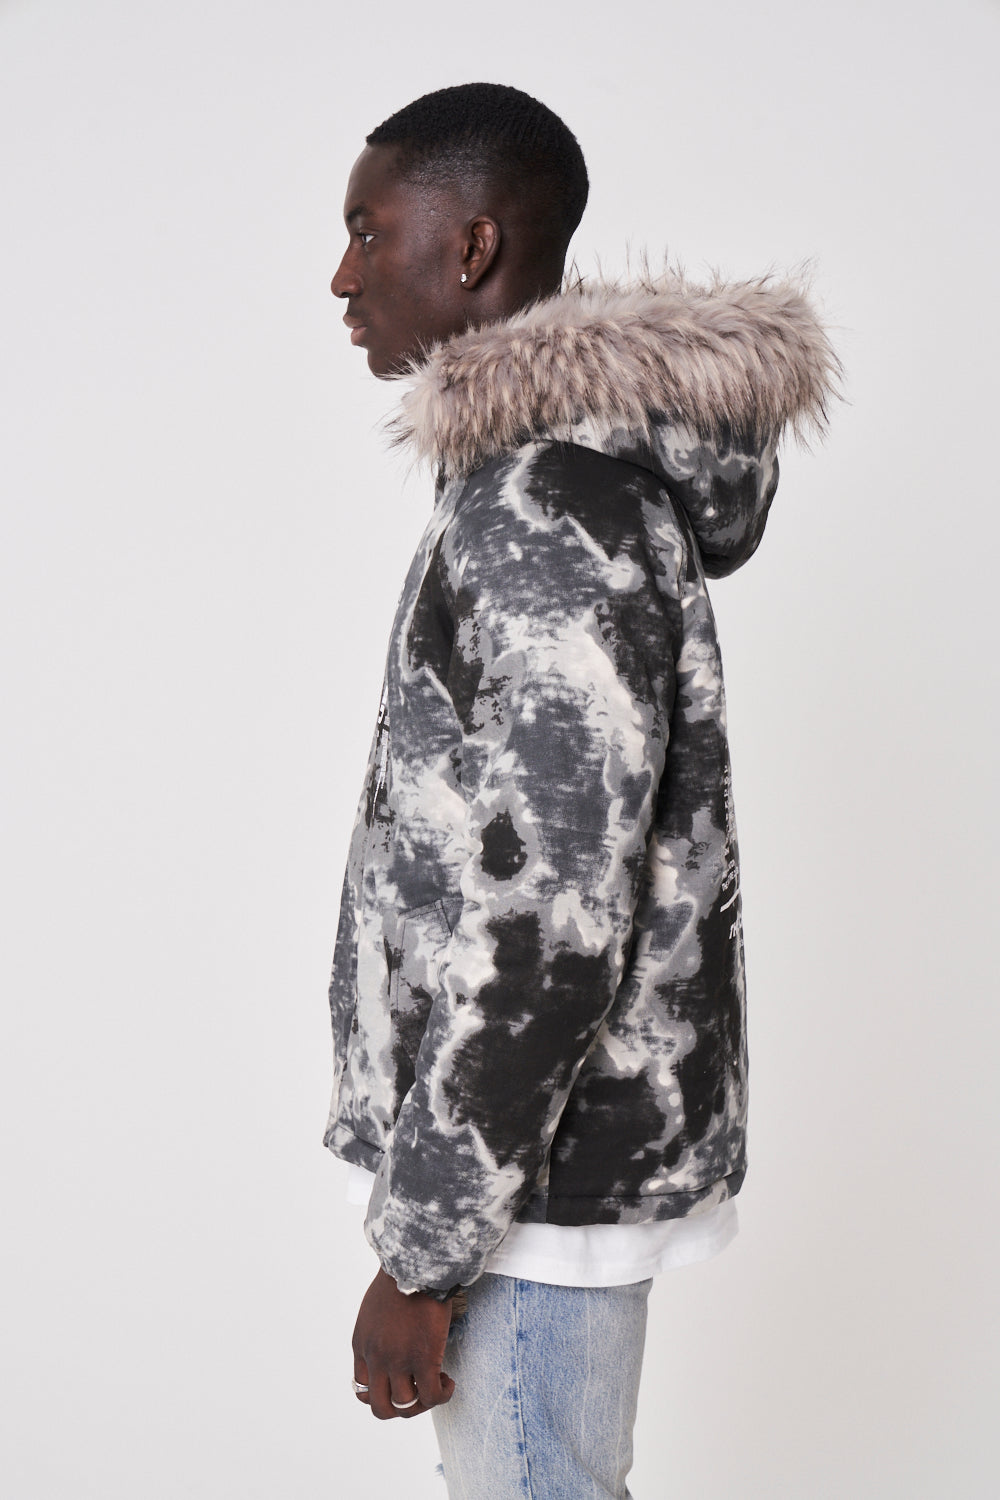 The Couture Club Fur Hooded Jacket - khaki camo